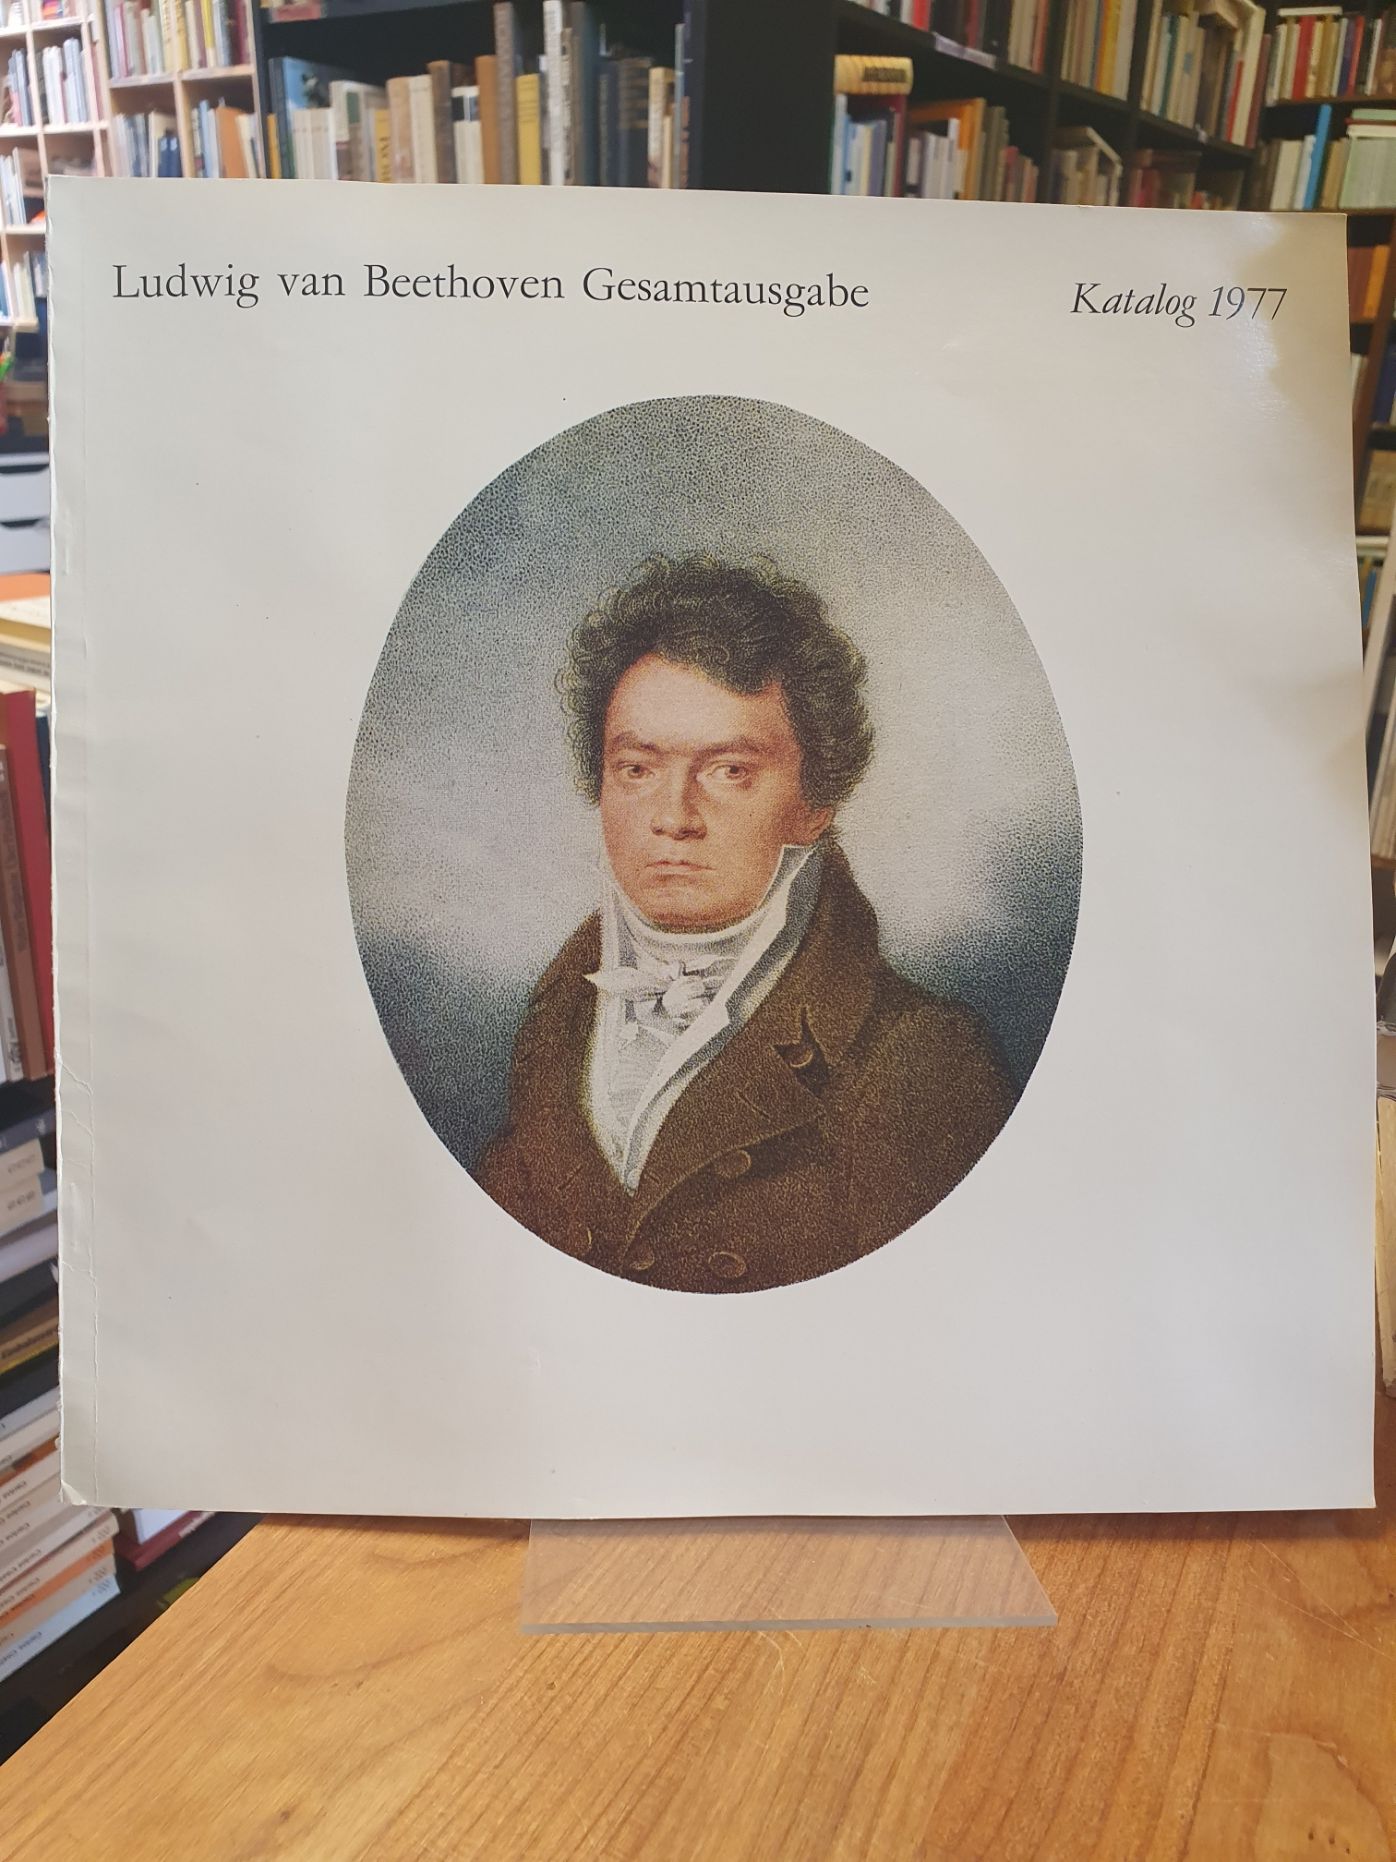 Beethoven, Ludwig van Beethoven – Gesamtausgabe – Katalog 1977,